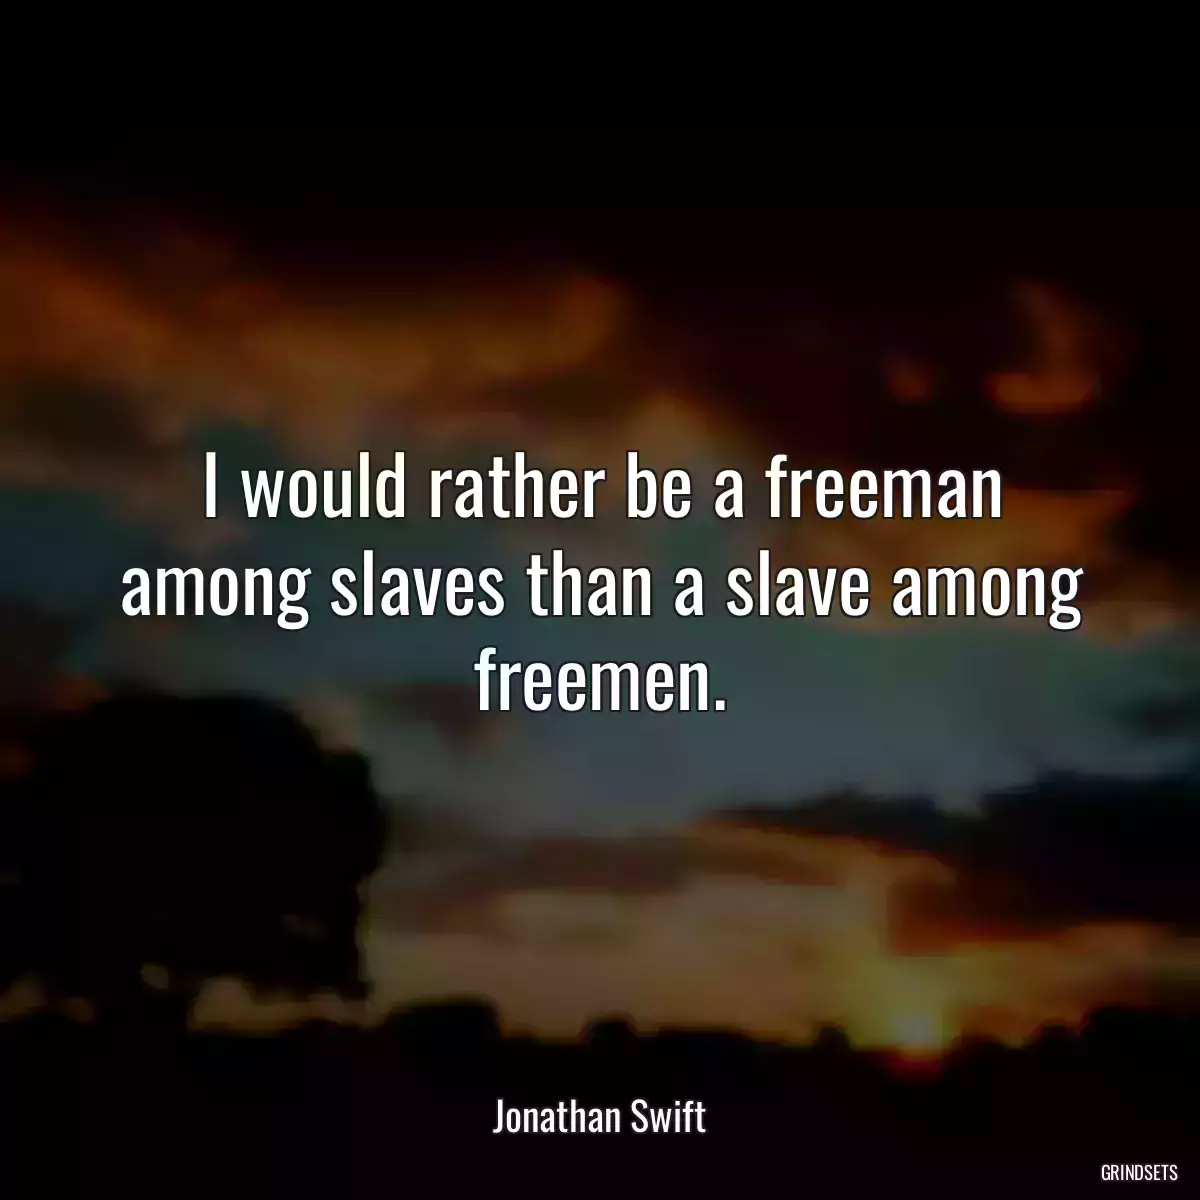 I would rather be a freeman among slaves than a slave among freemen.